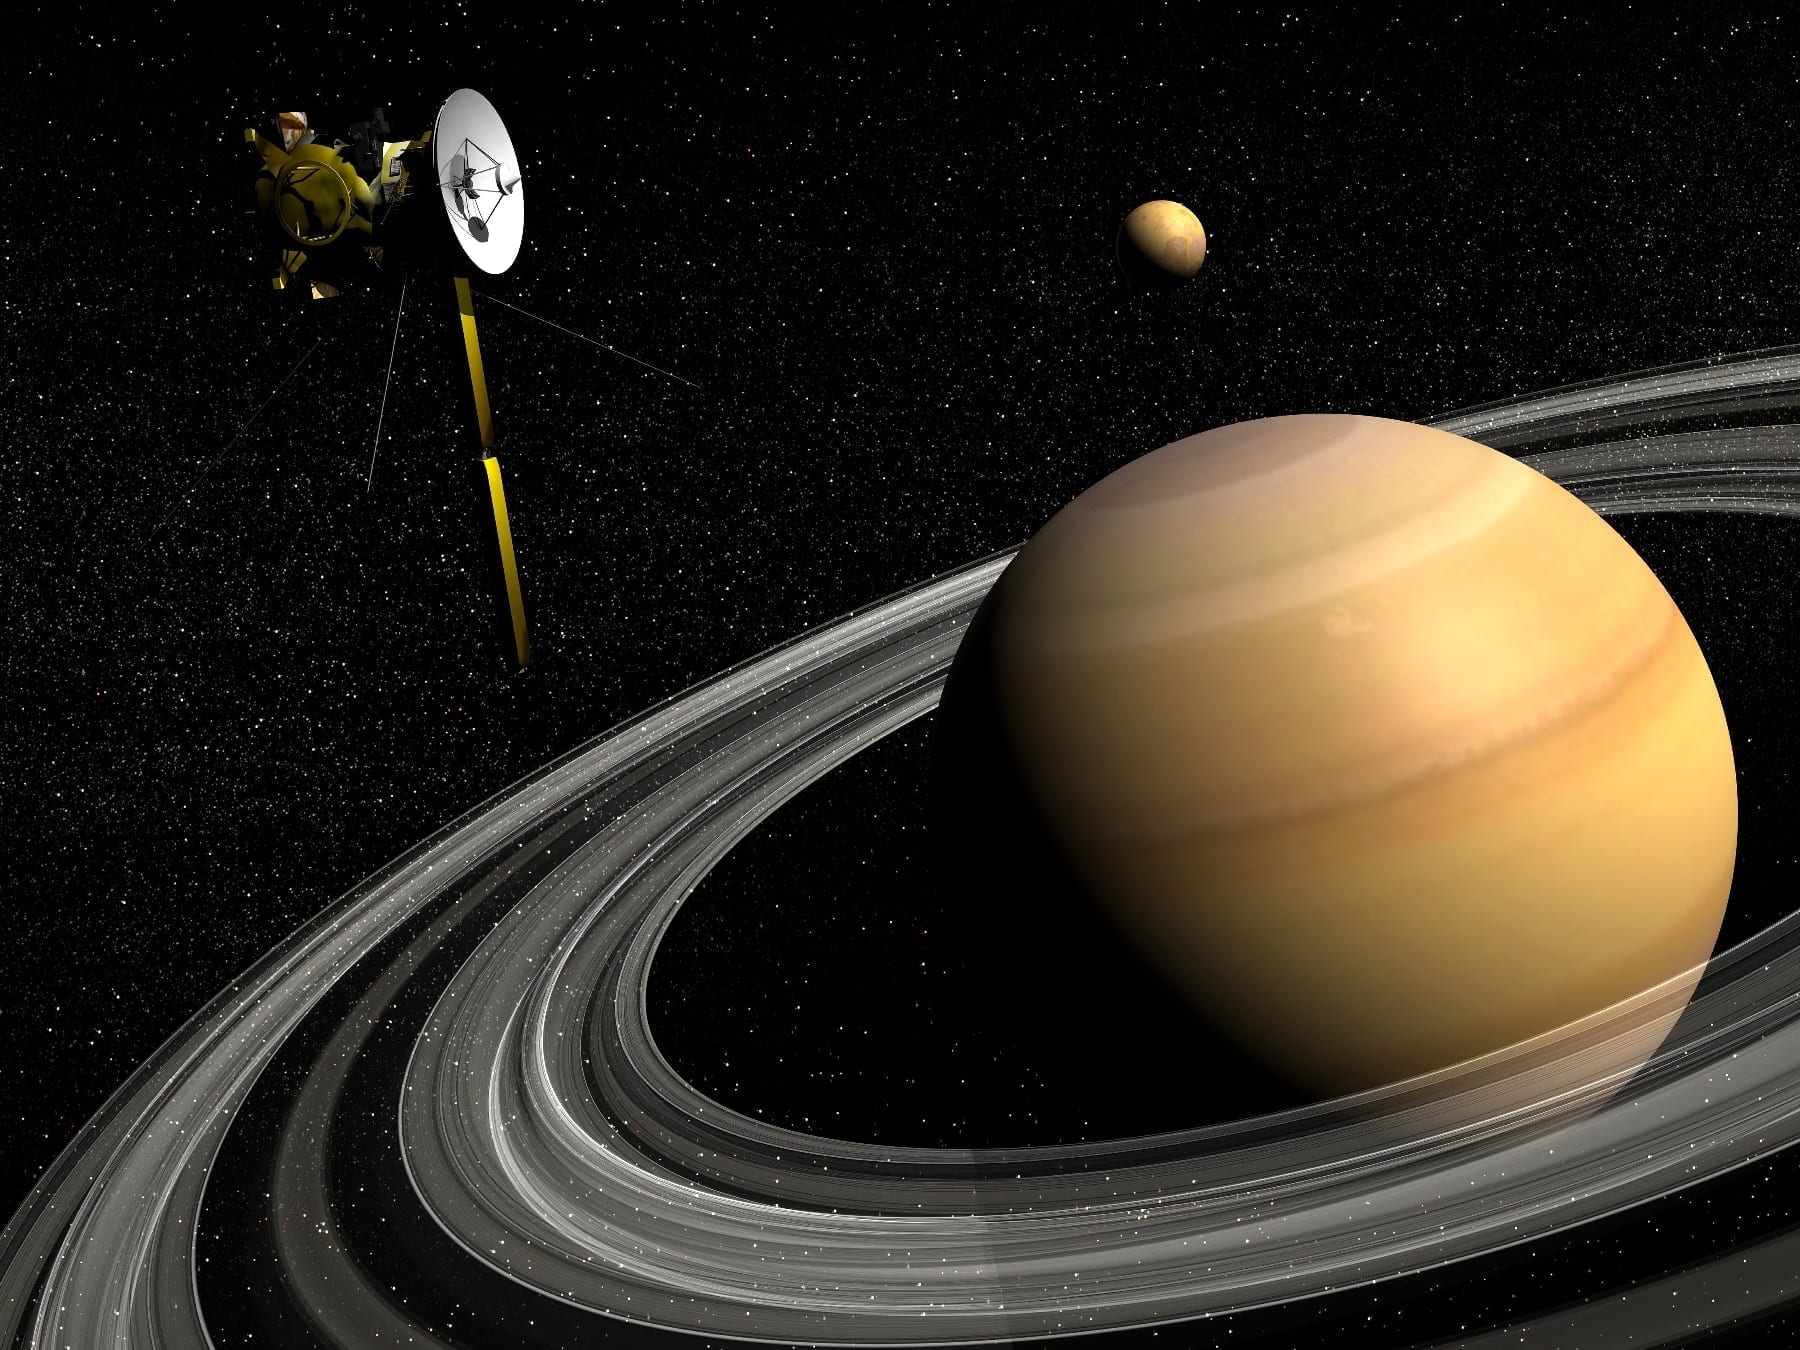 A Satellite orbiting Saturn and its moon Titan